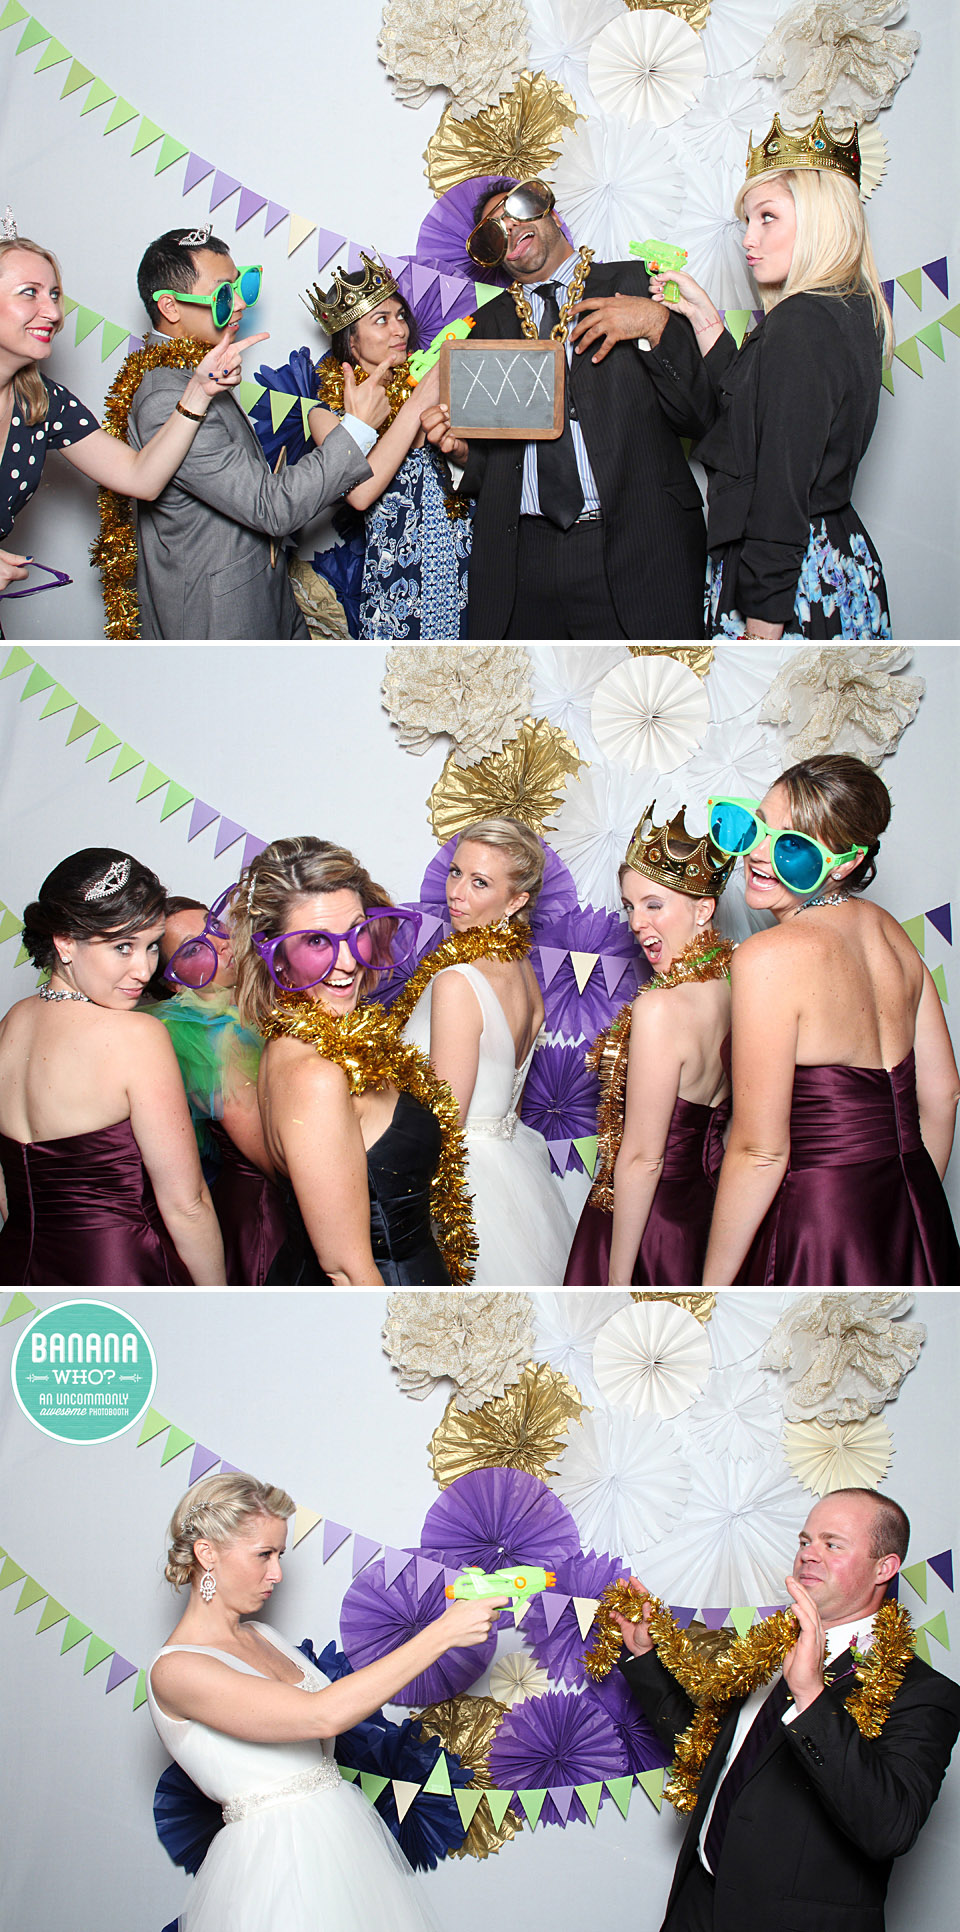 Scott wedding, Kansas City photo booth, Custom backdrops, Eggplant and chartreuse